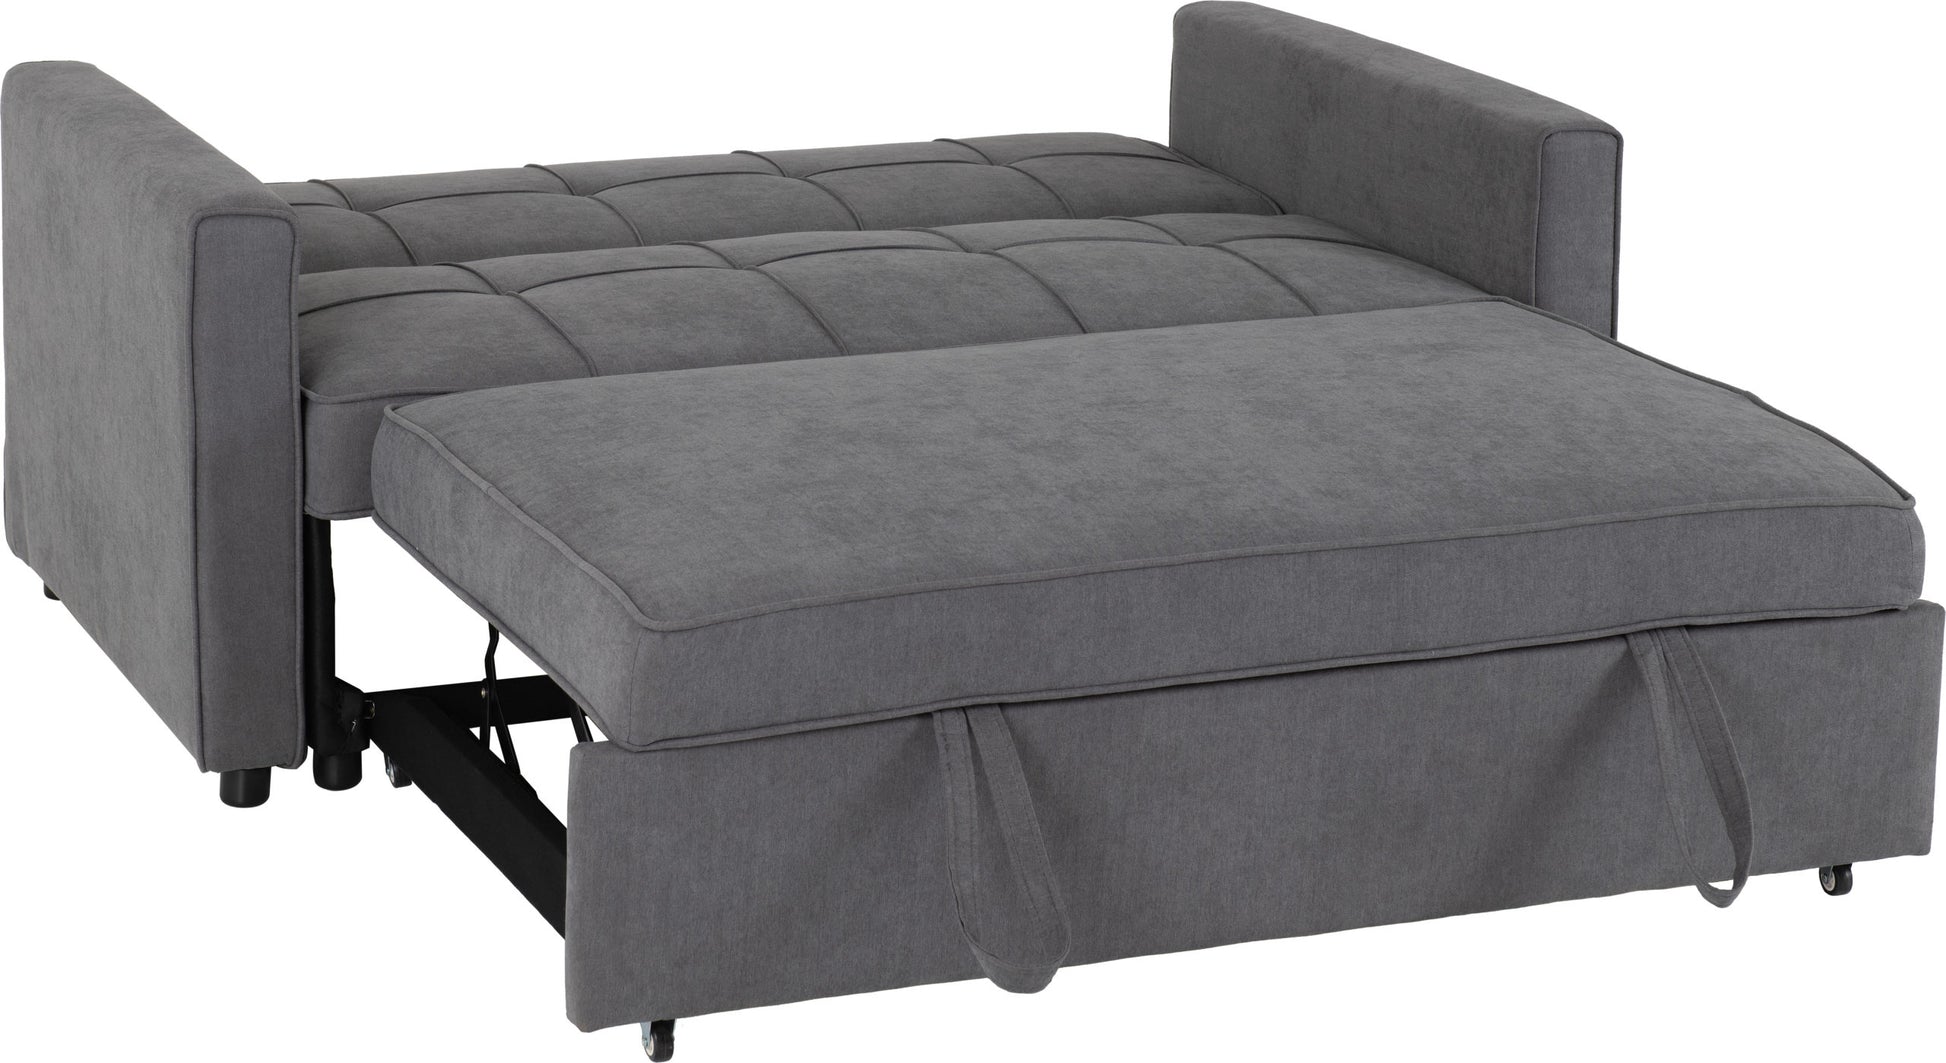 Astoria Sofa Bed - Dark Grey Fabric - The Right Buy Store